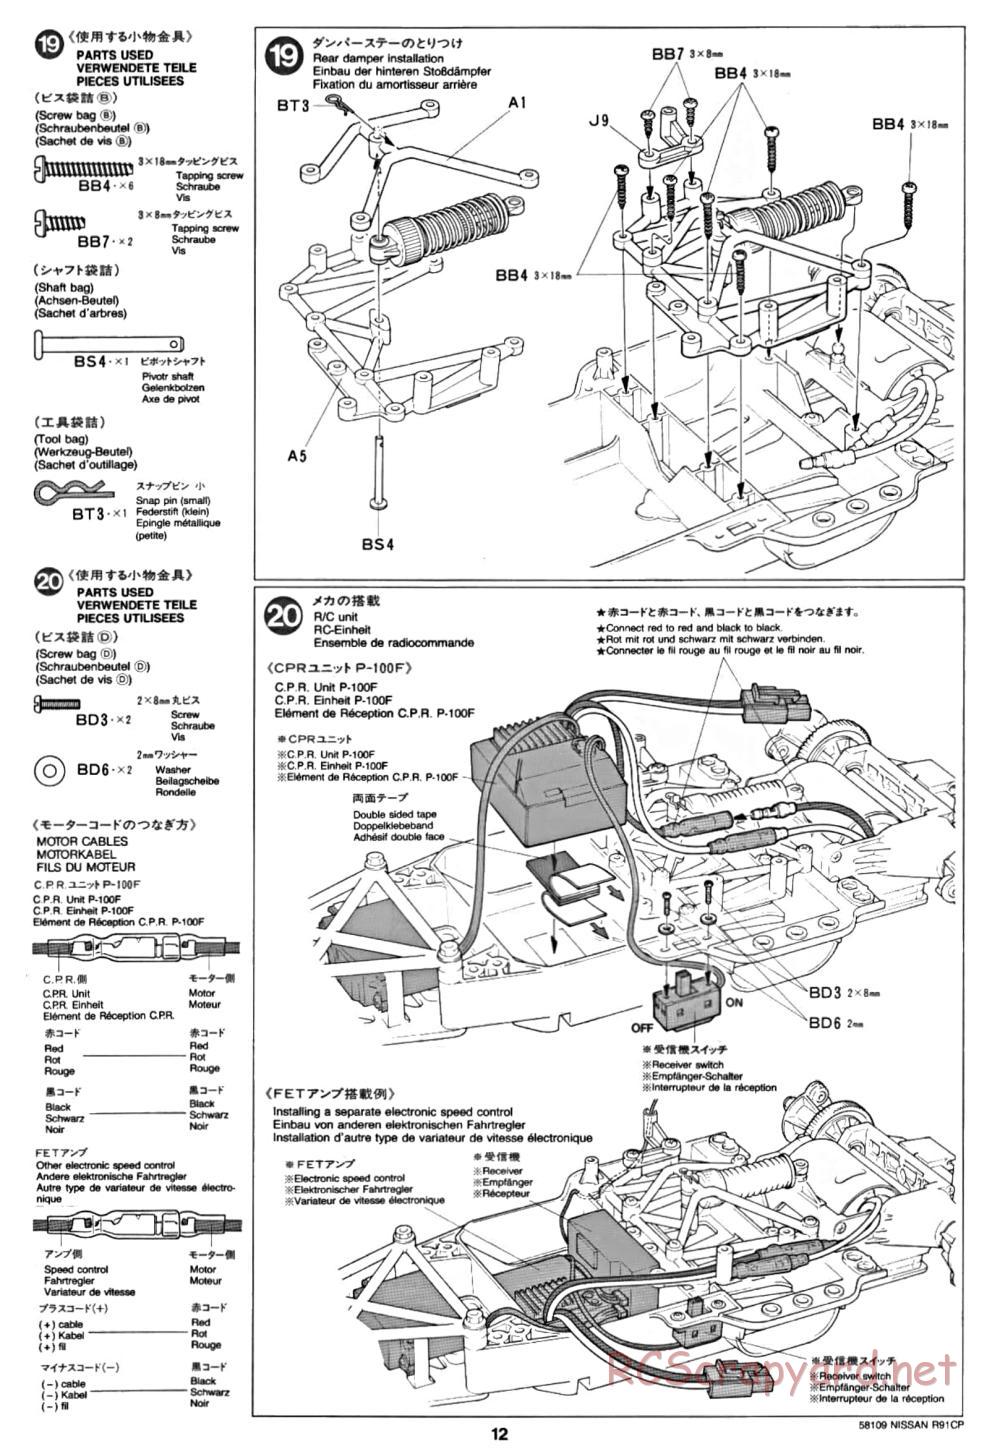 Tamiya - Nissan R91CP - Group-C Chassis - Manual - Page 12